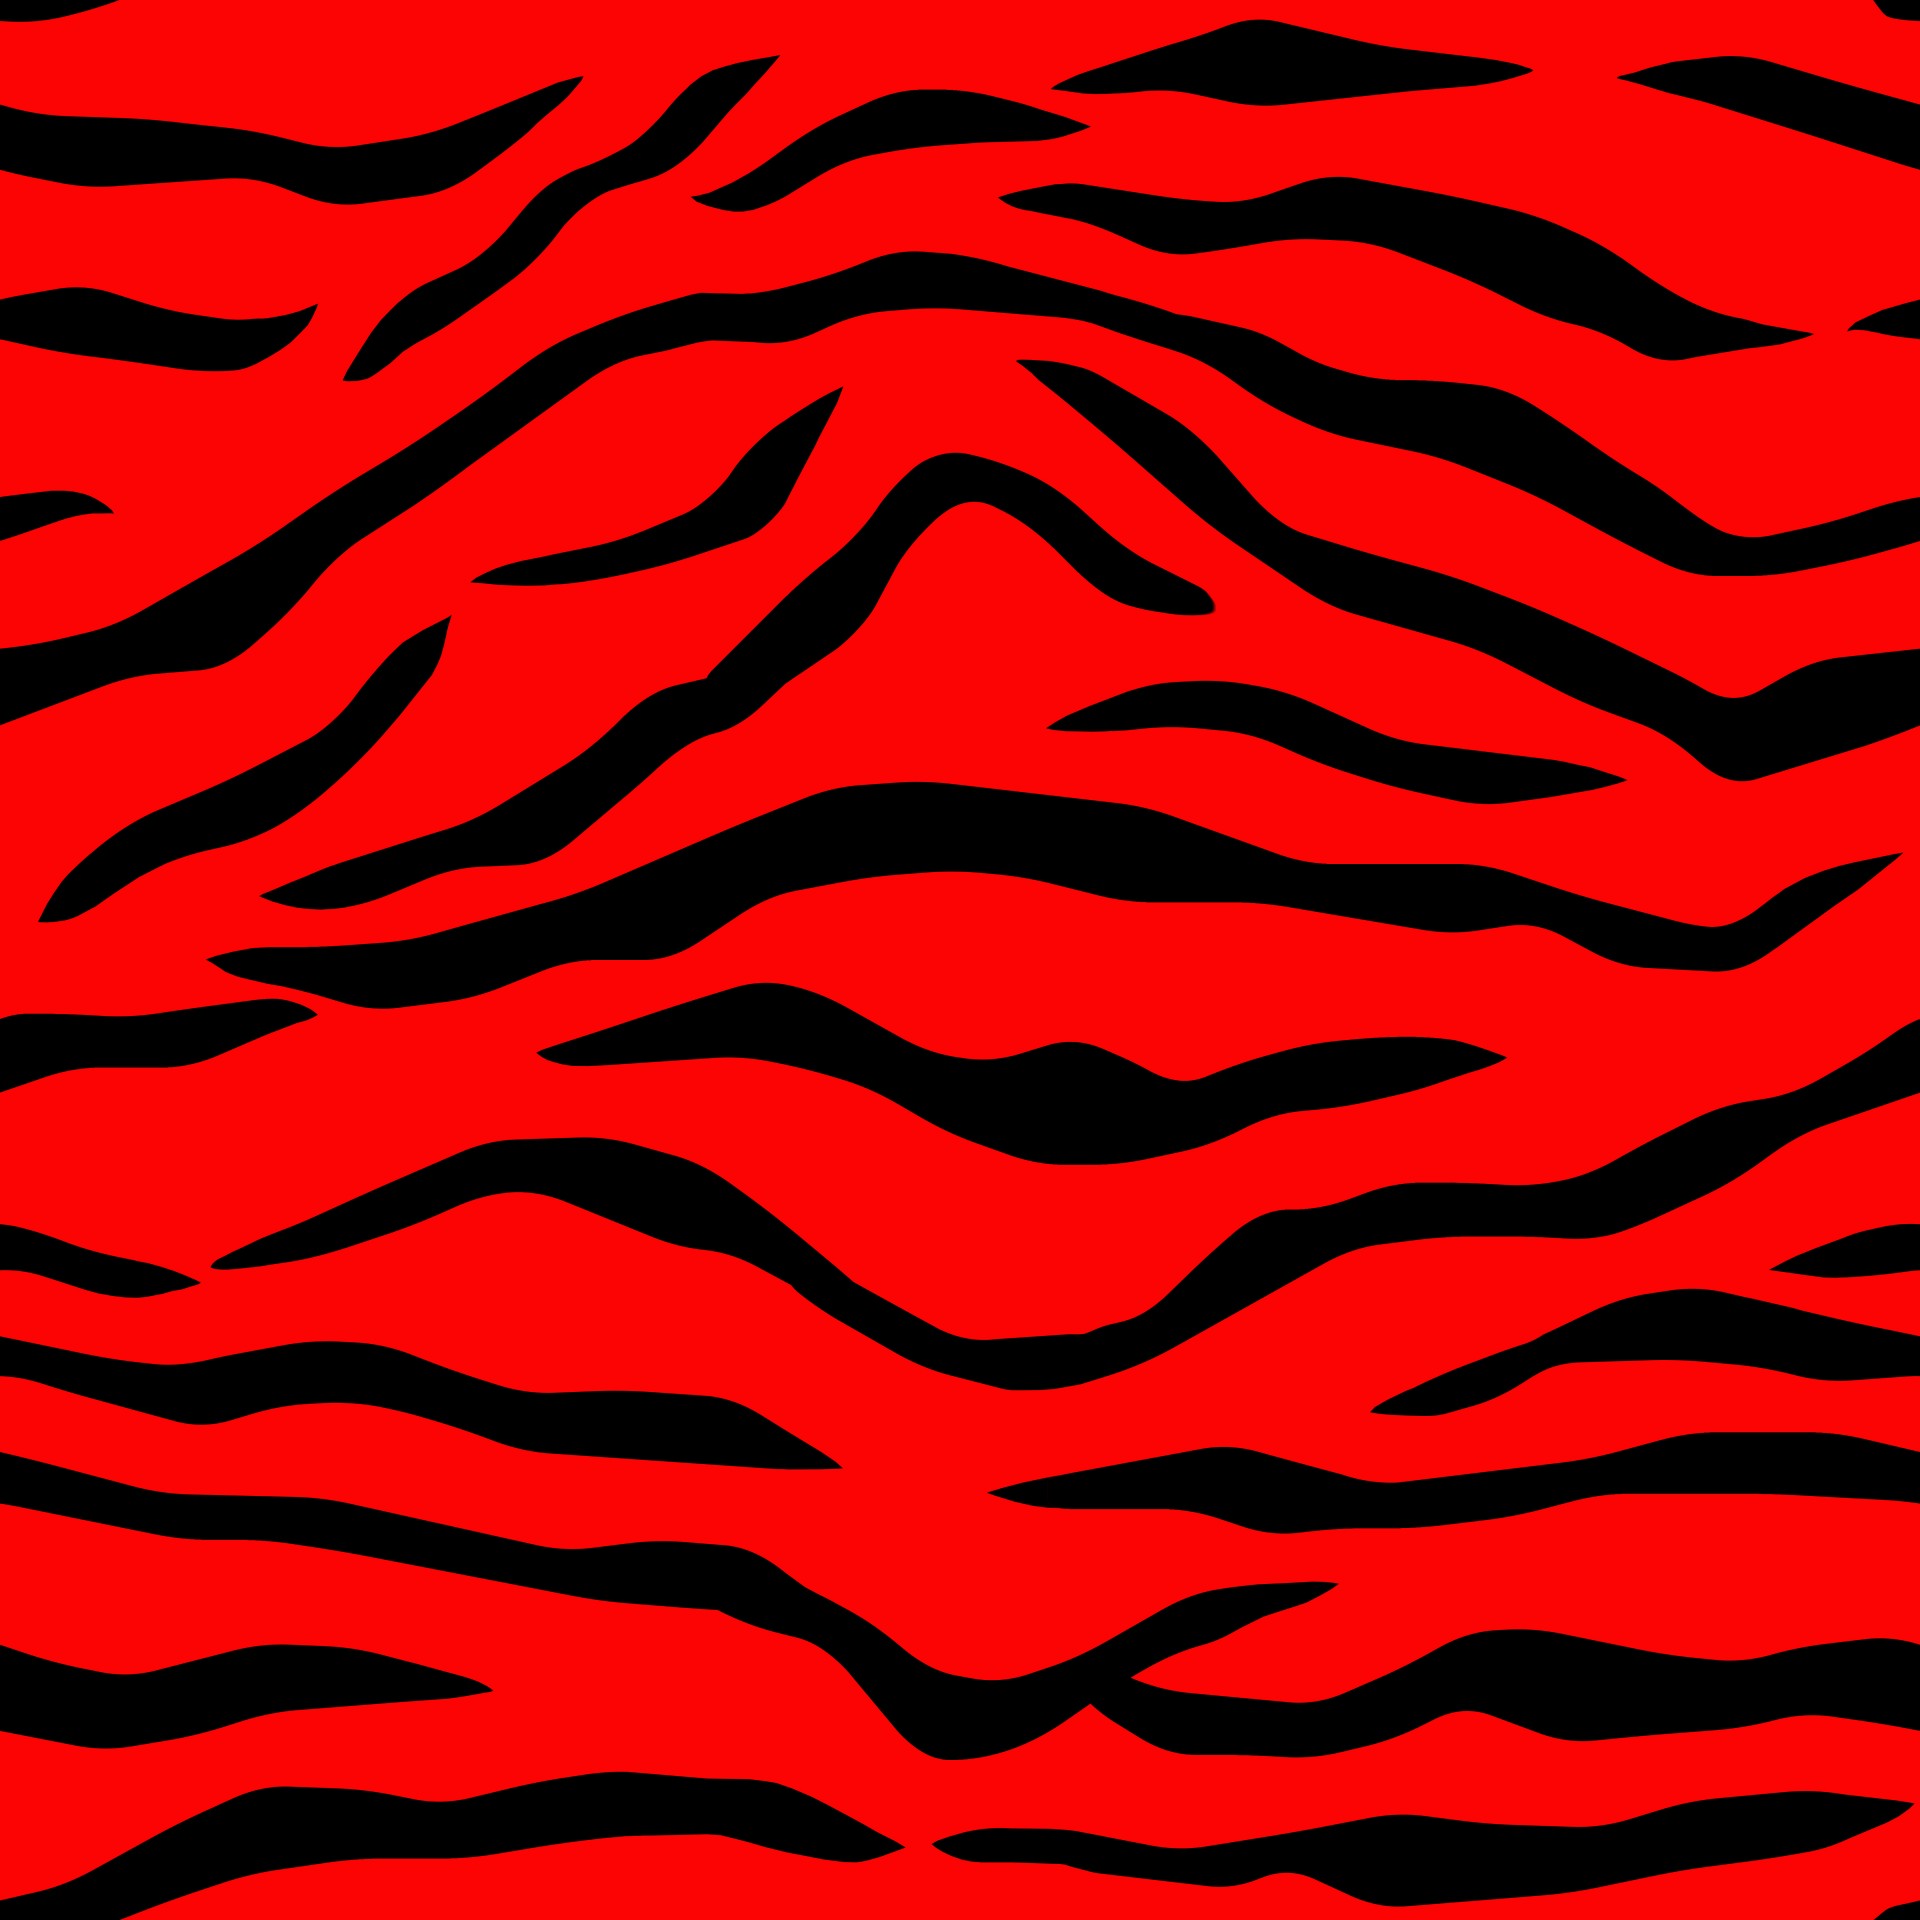 Ред тайгер. Полосы тигра. Тигровый узор. Полоски тигра. Тигровая текстура.